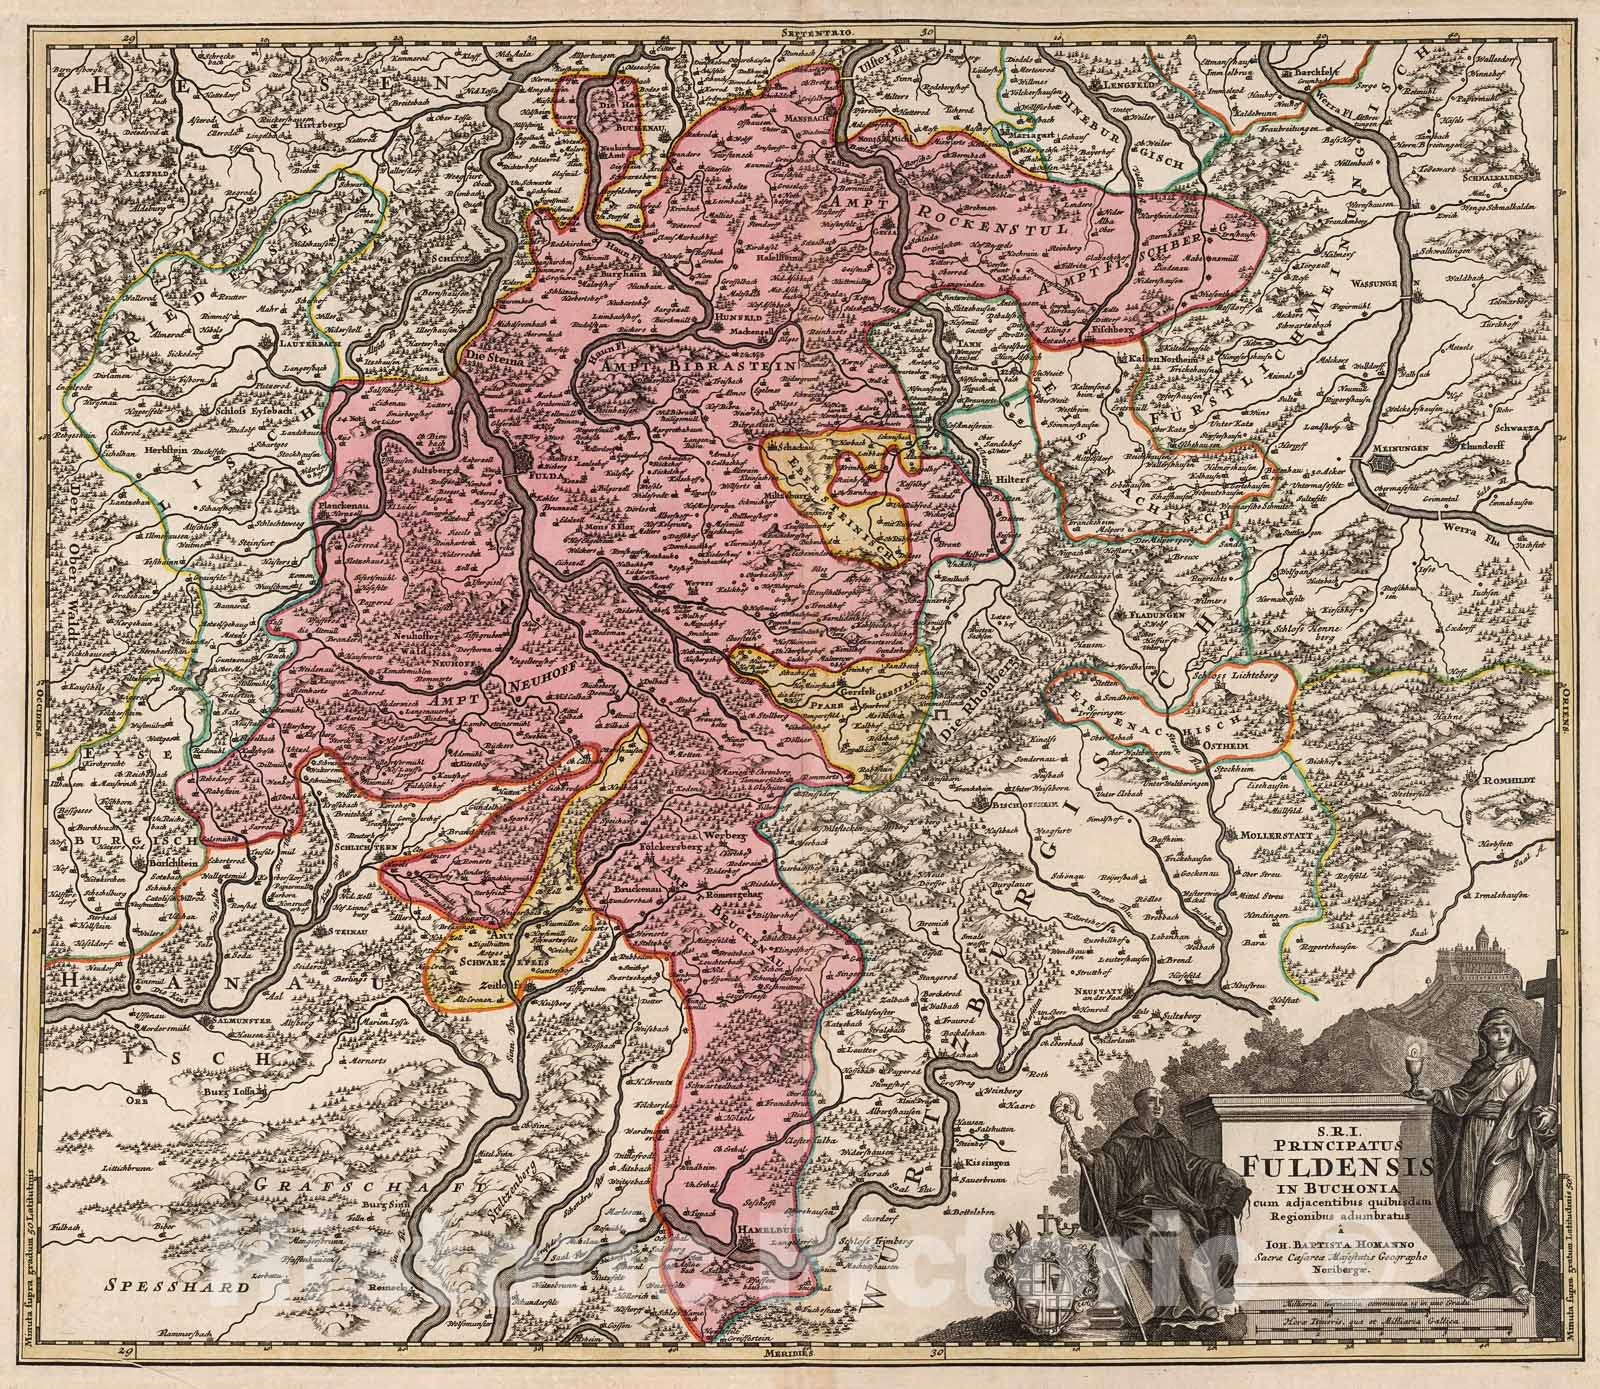 Historic Map : S.R.I. Principatus Fuldensis in Buchonia., 1716, Vintage Wall Decor